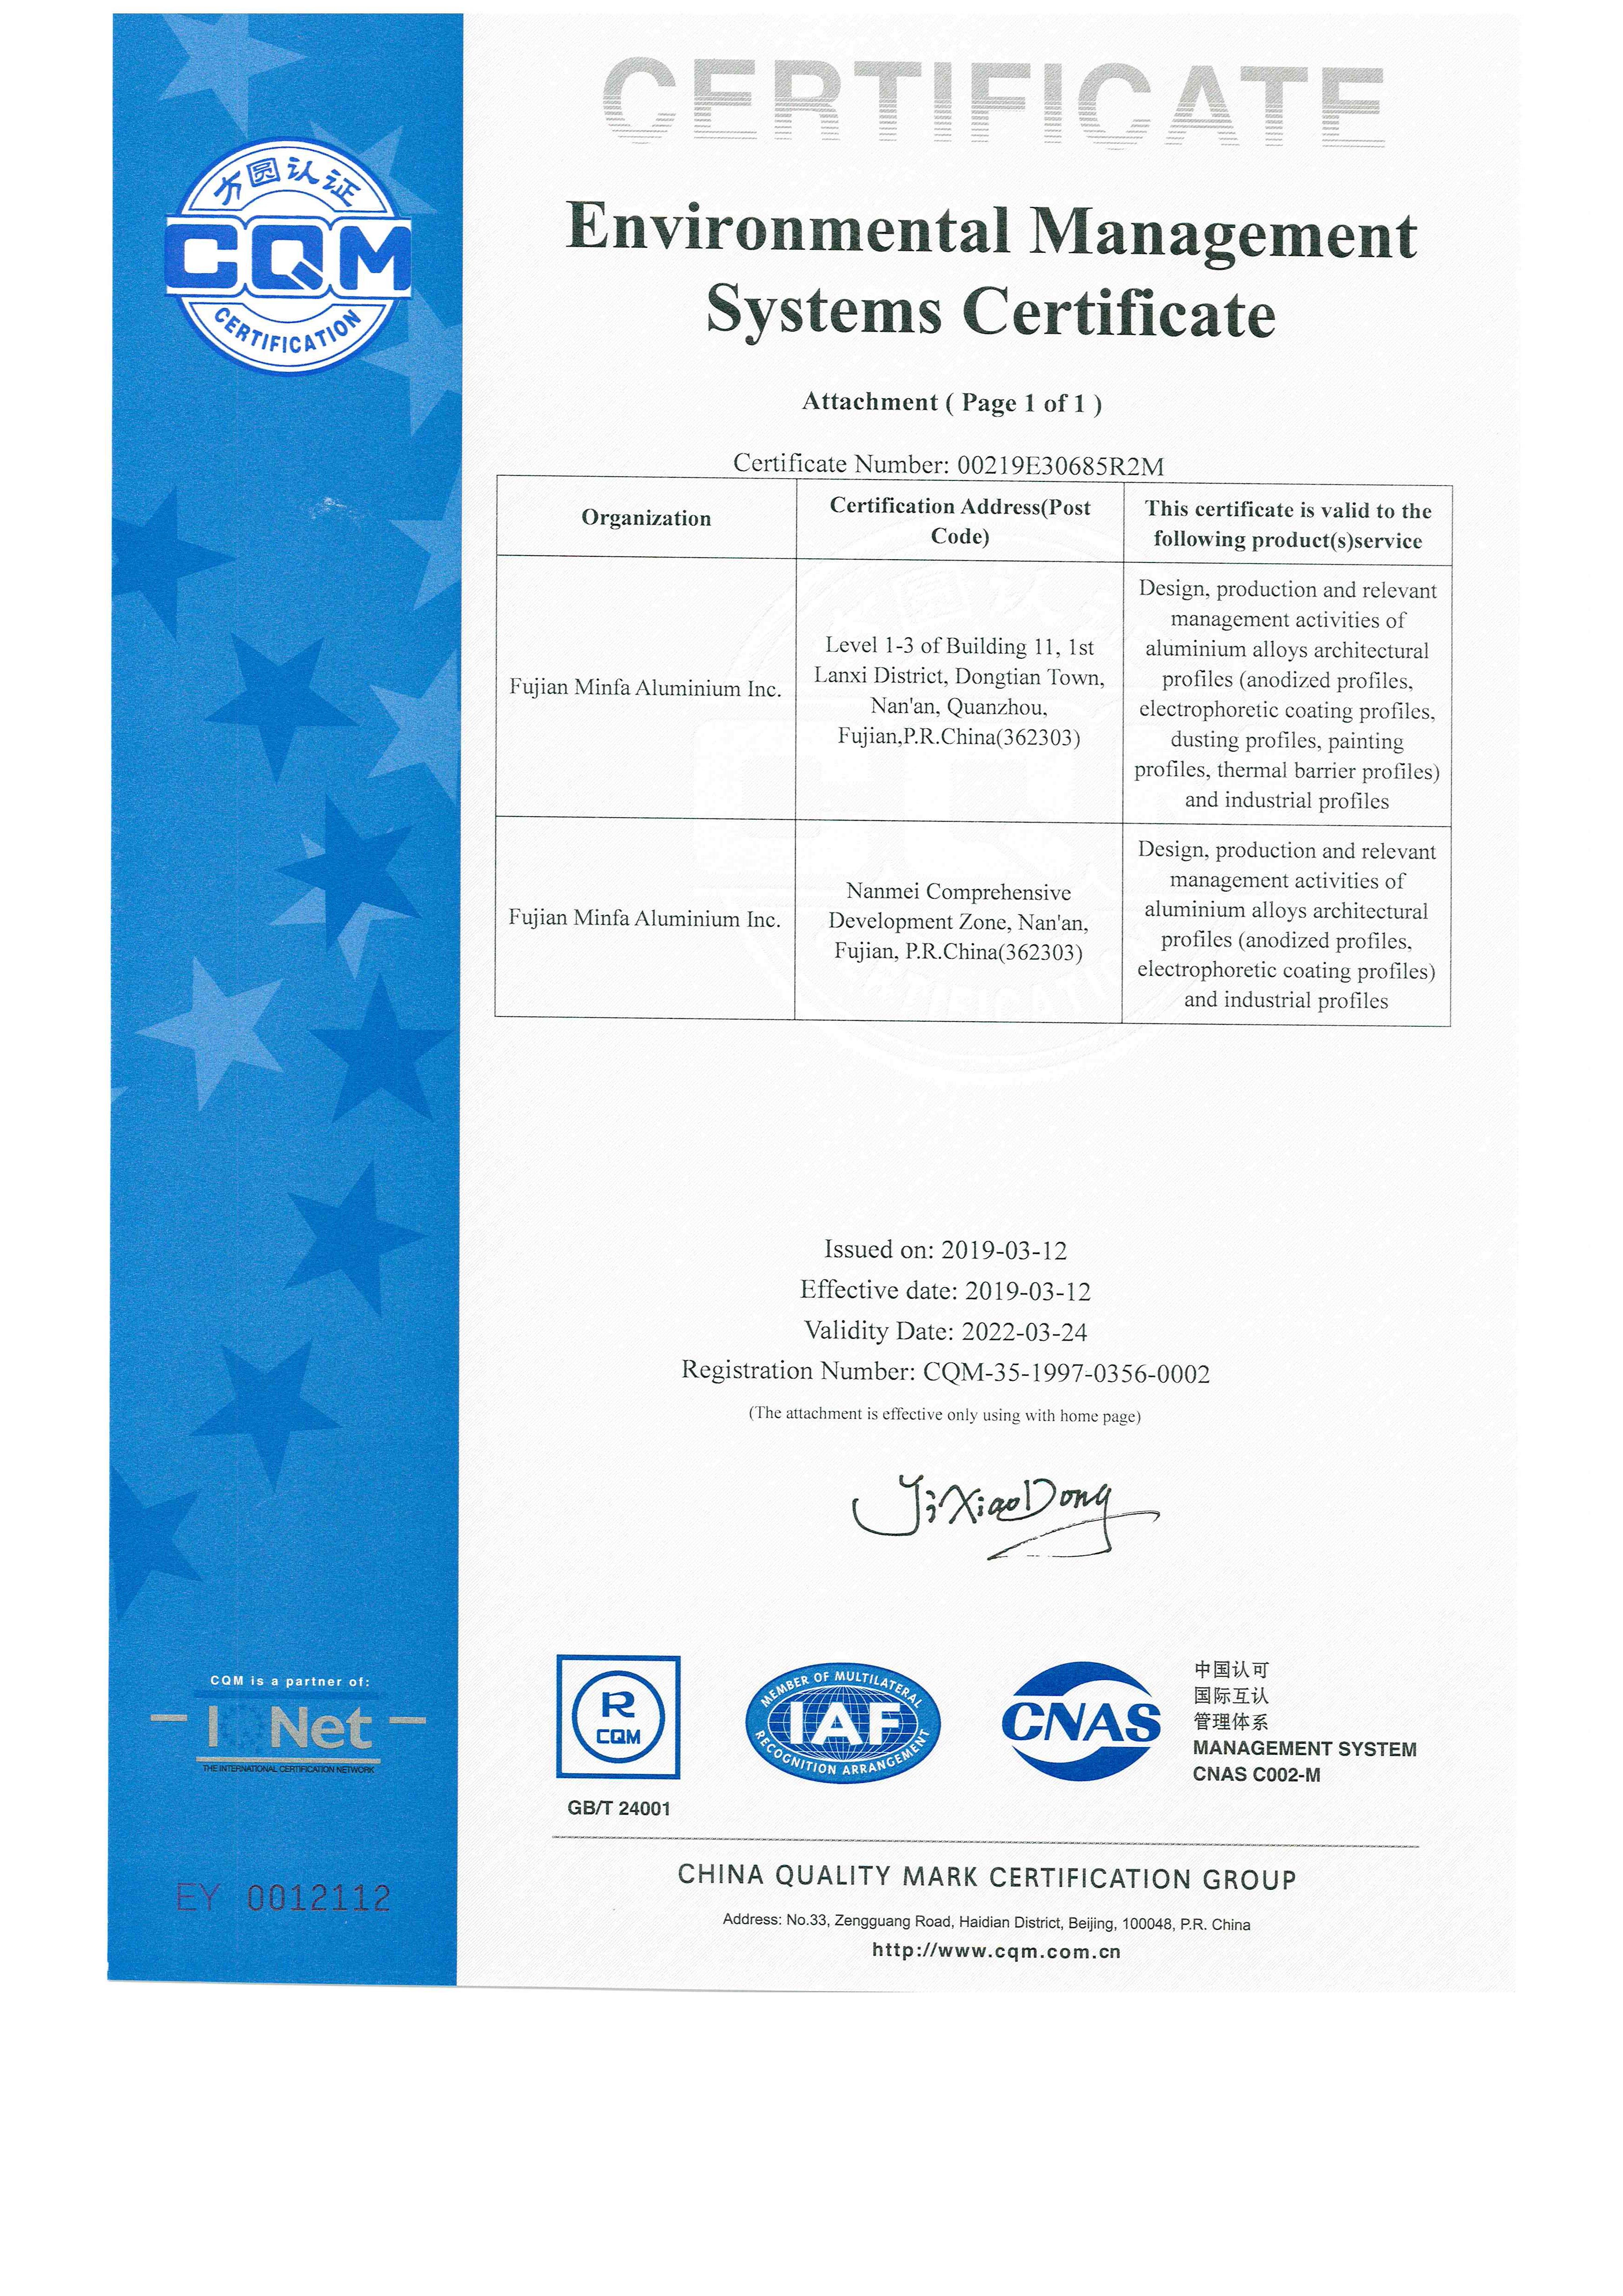 Environmental Management Systems Certificate 2.jpg